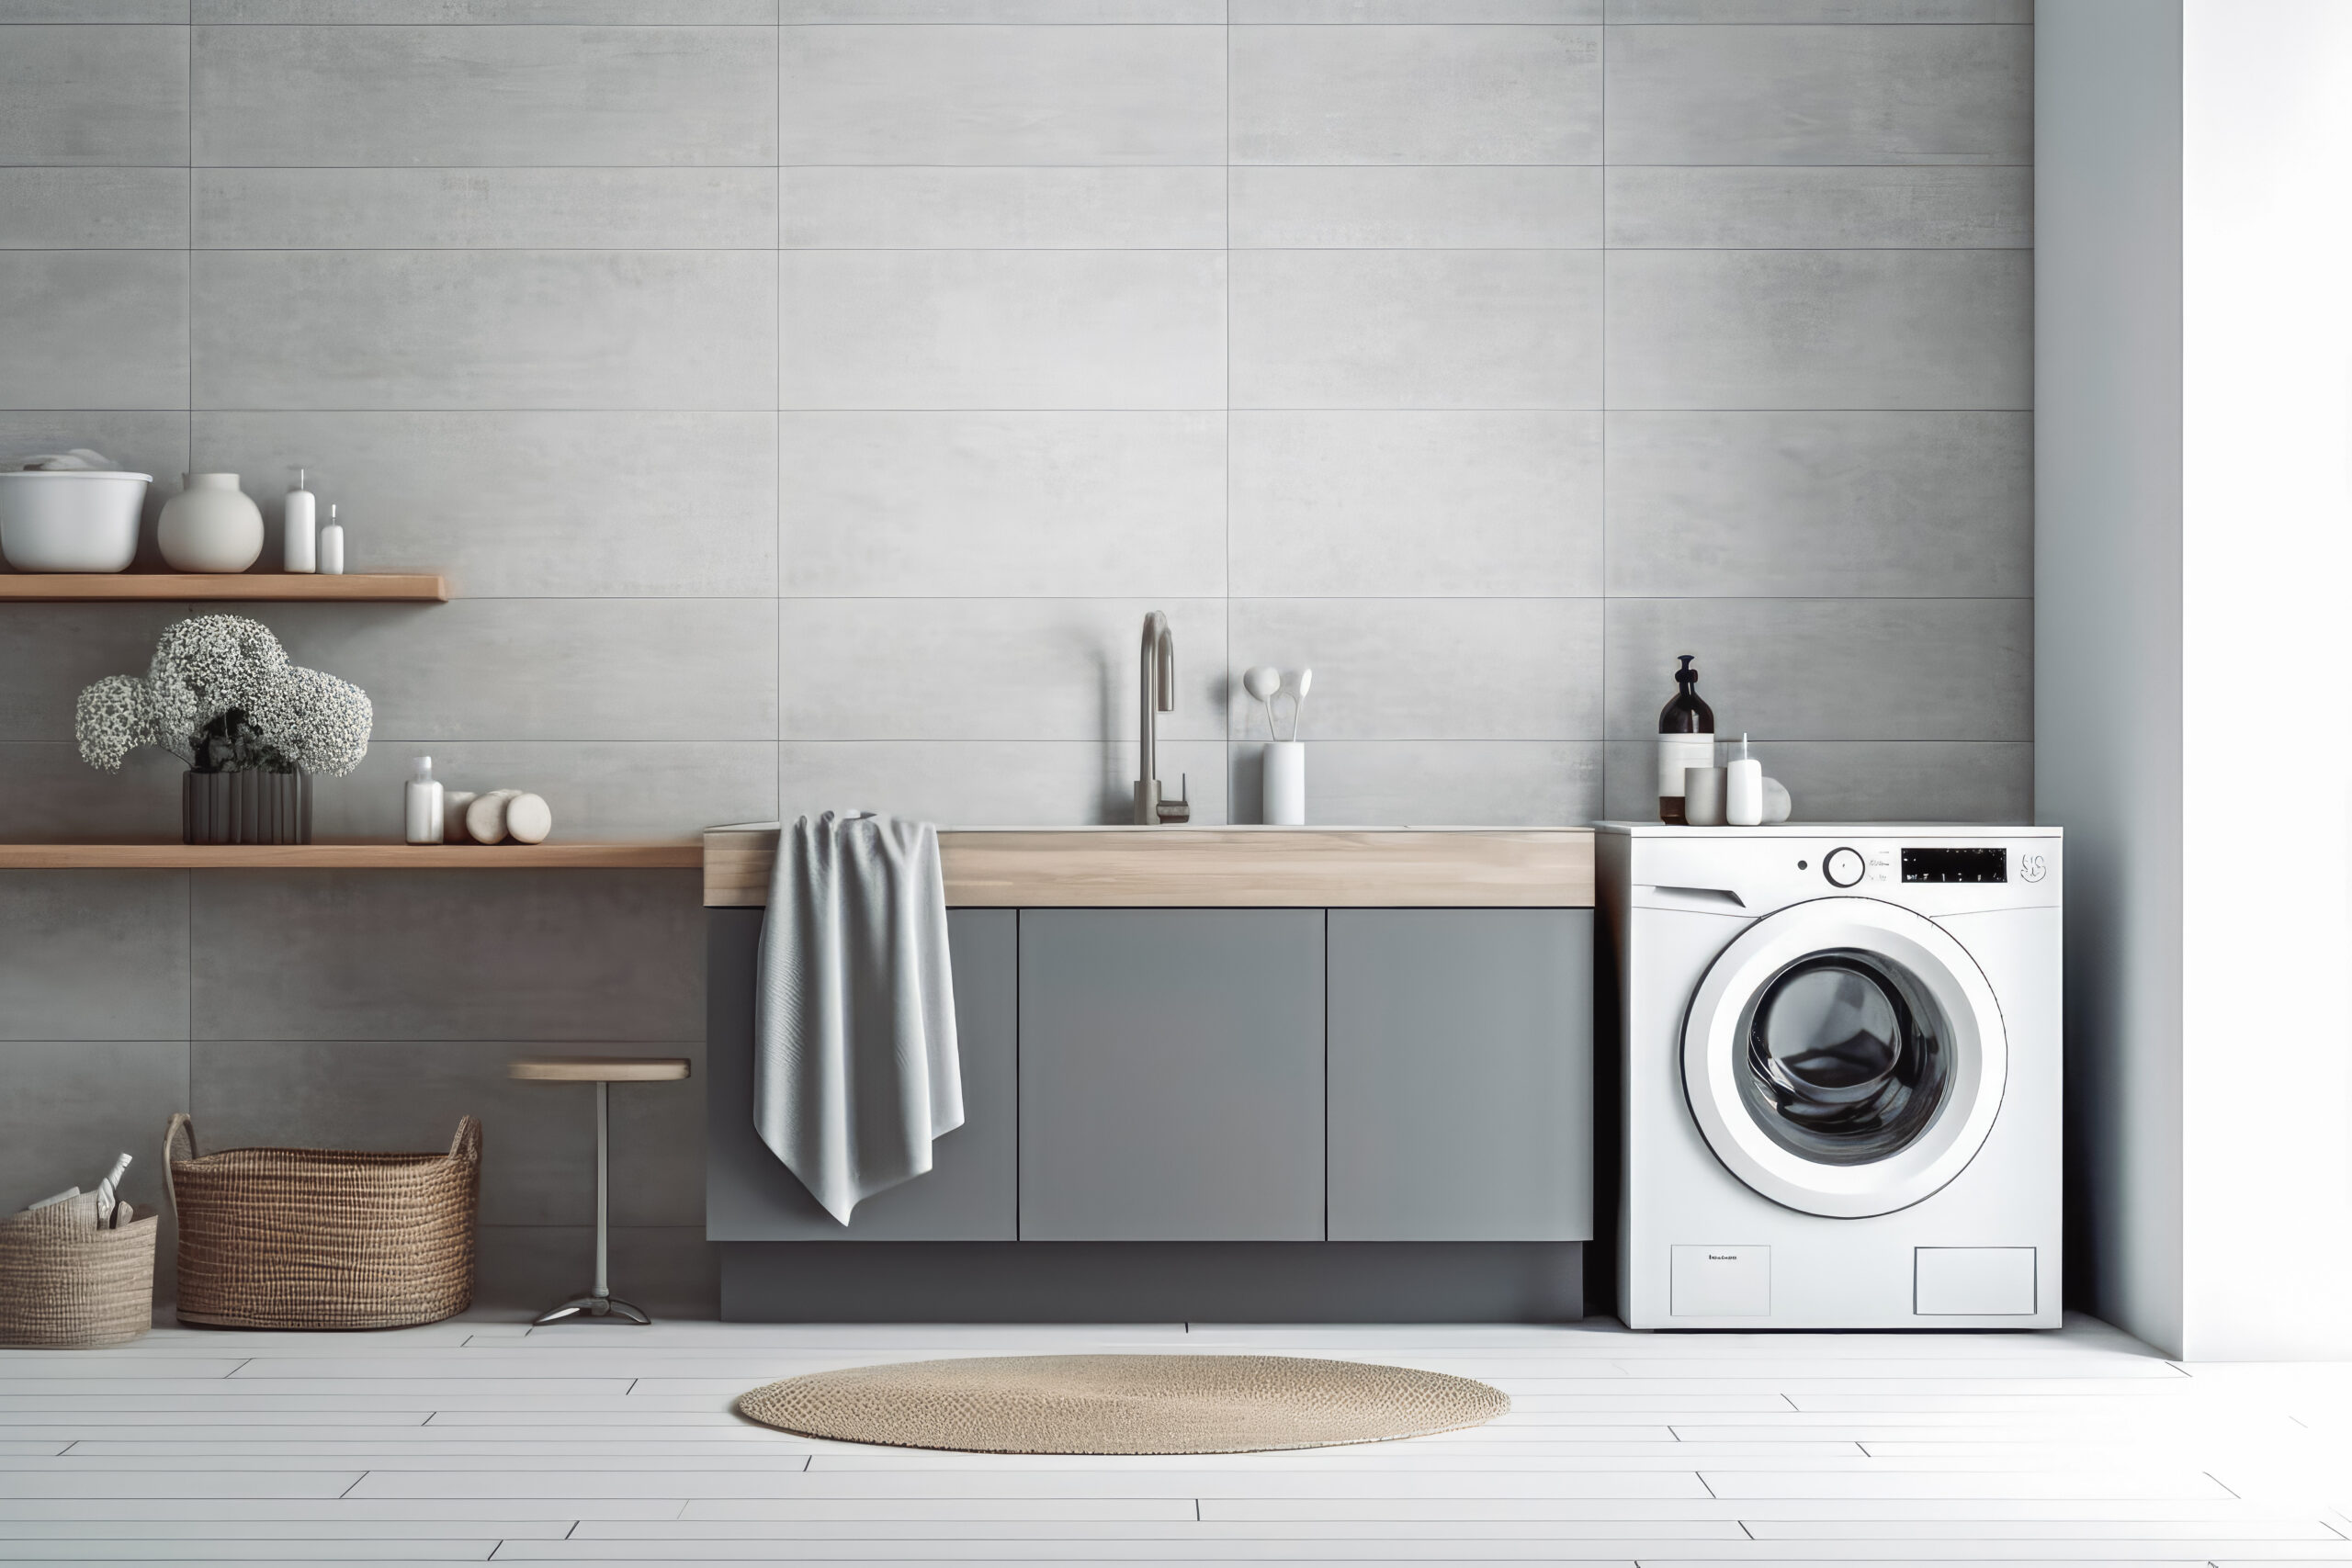 Grey laundry room sink washing machine. Minimalistic design interior of modern house. Generative AI